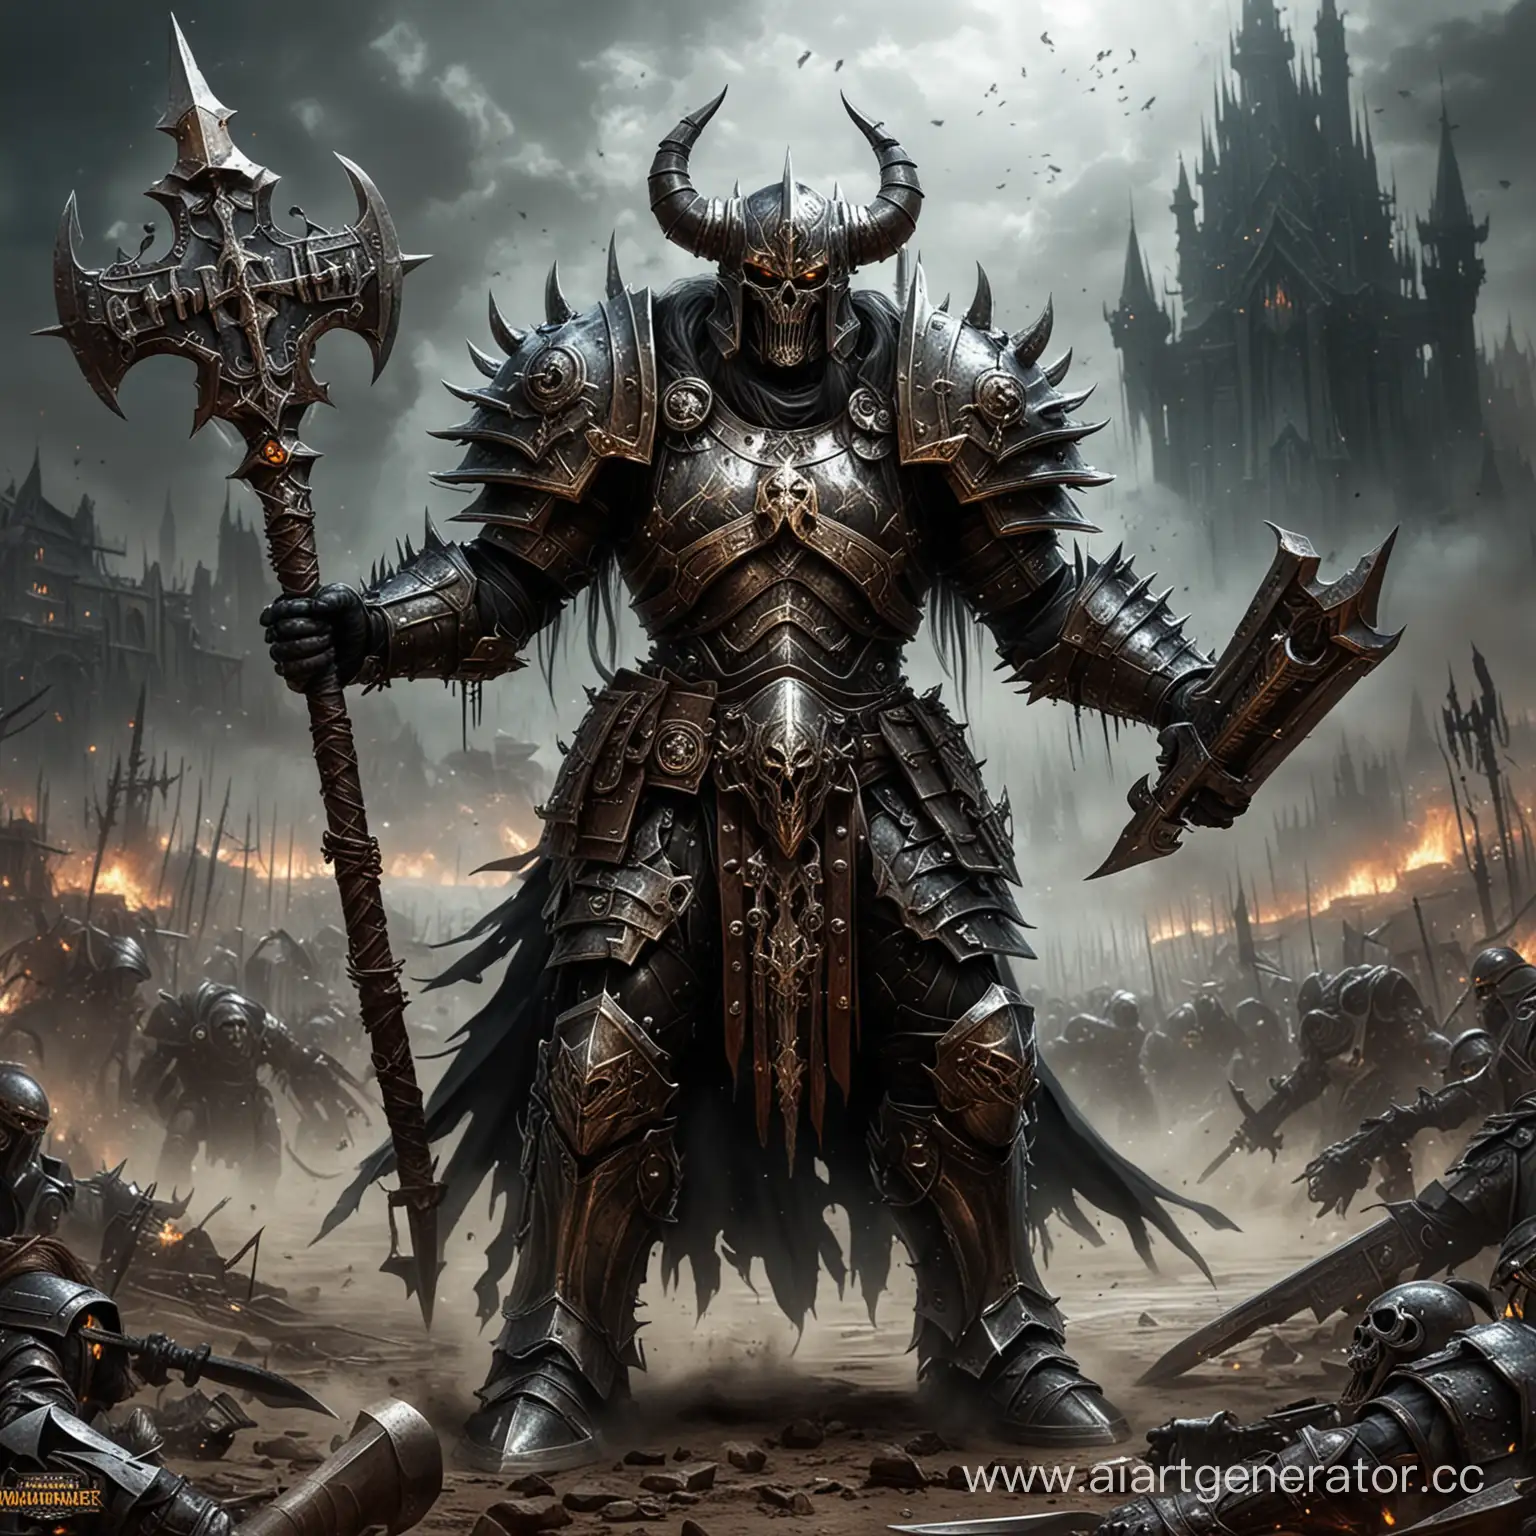 Chaos Warrior (Warhammer Fantasy Battle) art . in massive shiny armor with the sign of chaos. Стоит на коленях. меч торчит из груди.
Поле Боя фиолетовый закат .